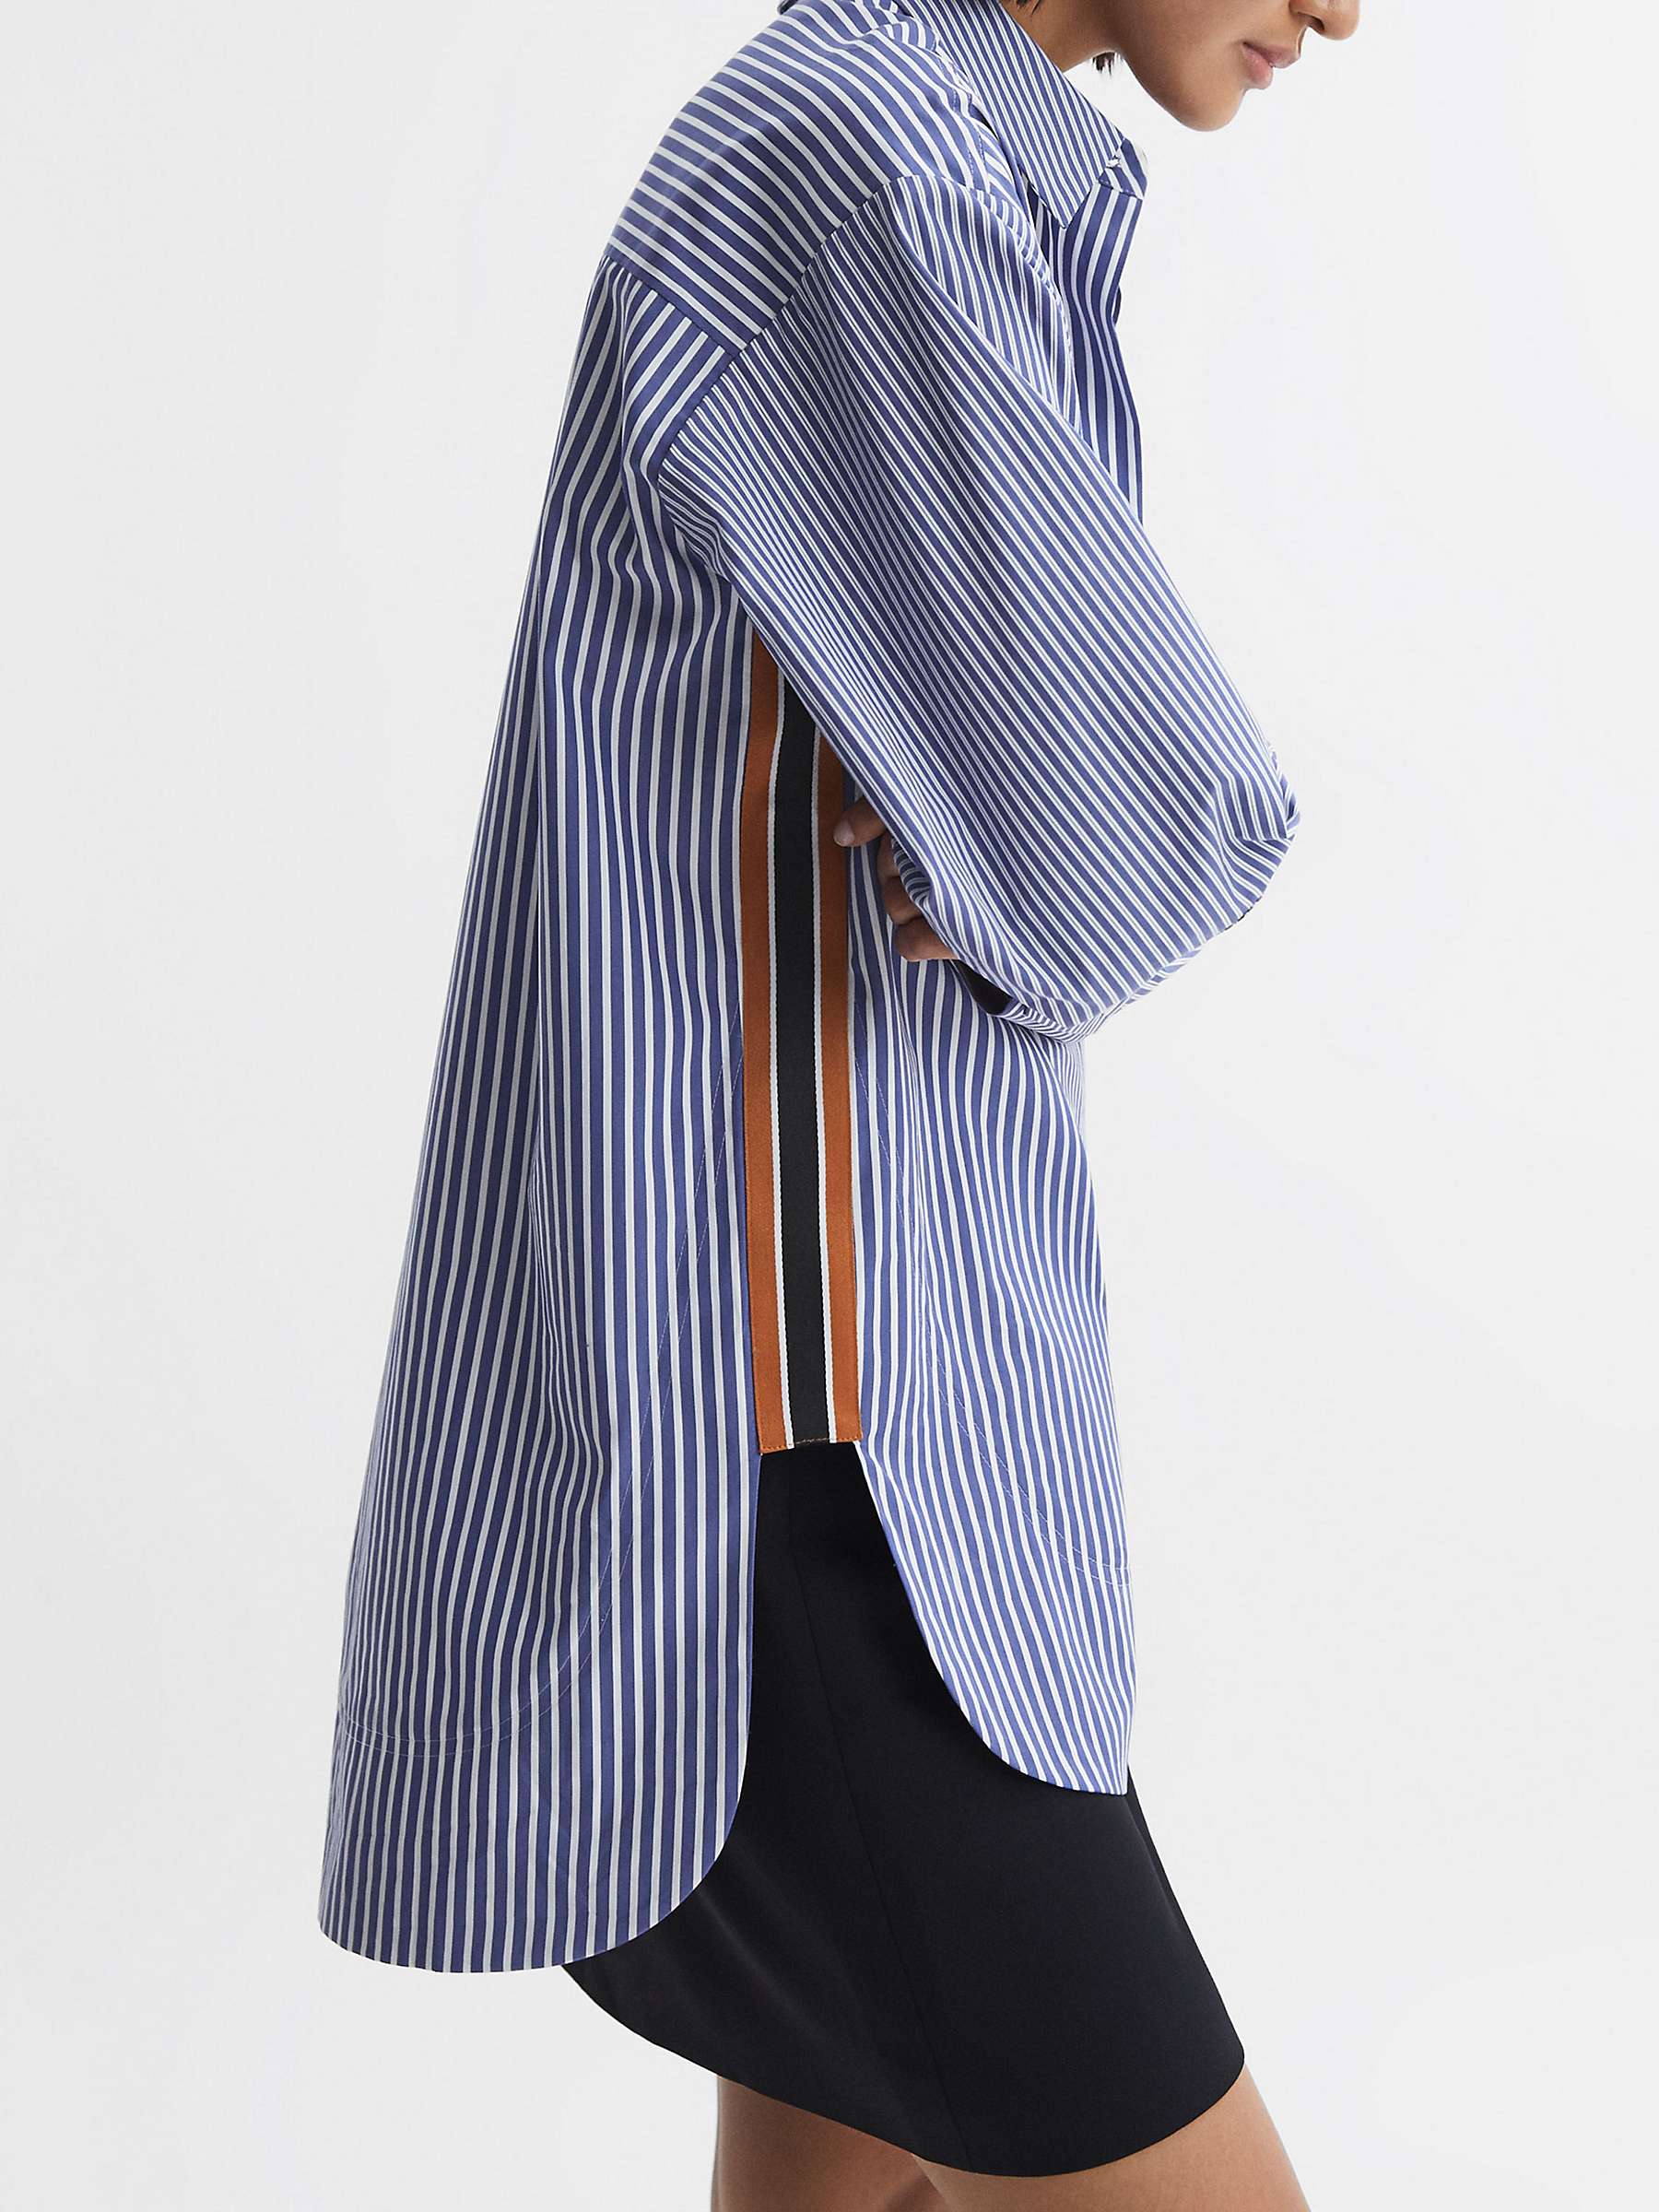 Buy Reiss Danica Stripe Shirt, Blue/White Online at johnlewis.com